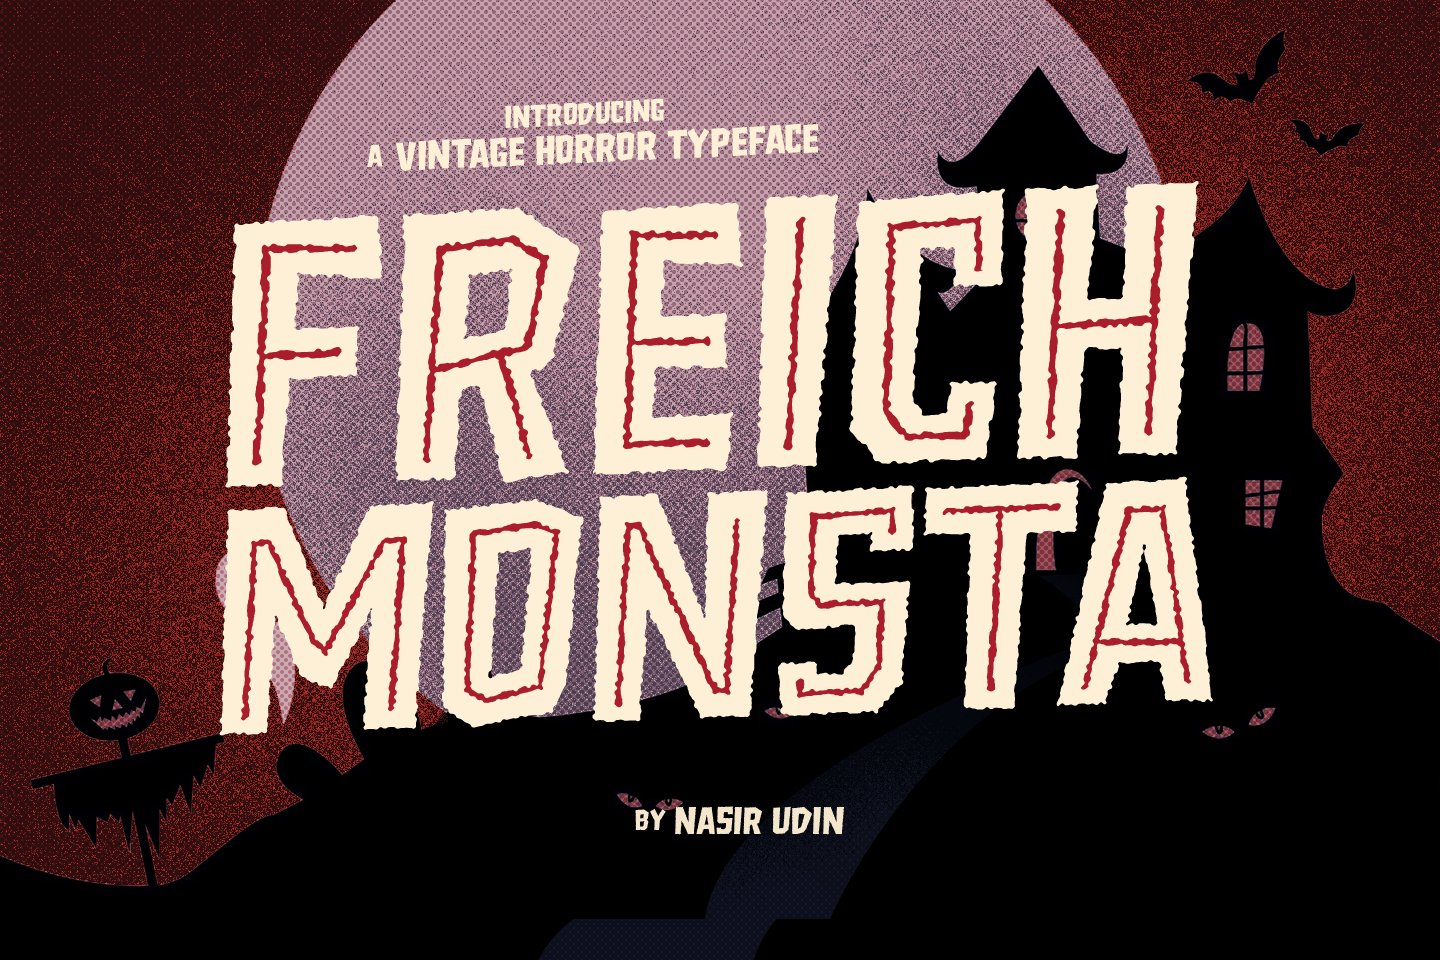 Freich Monsta - Vintage Horror Fonts cover image.